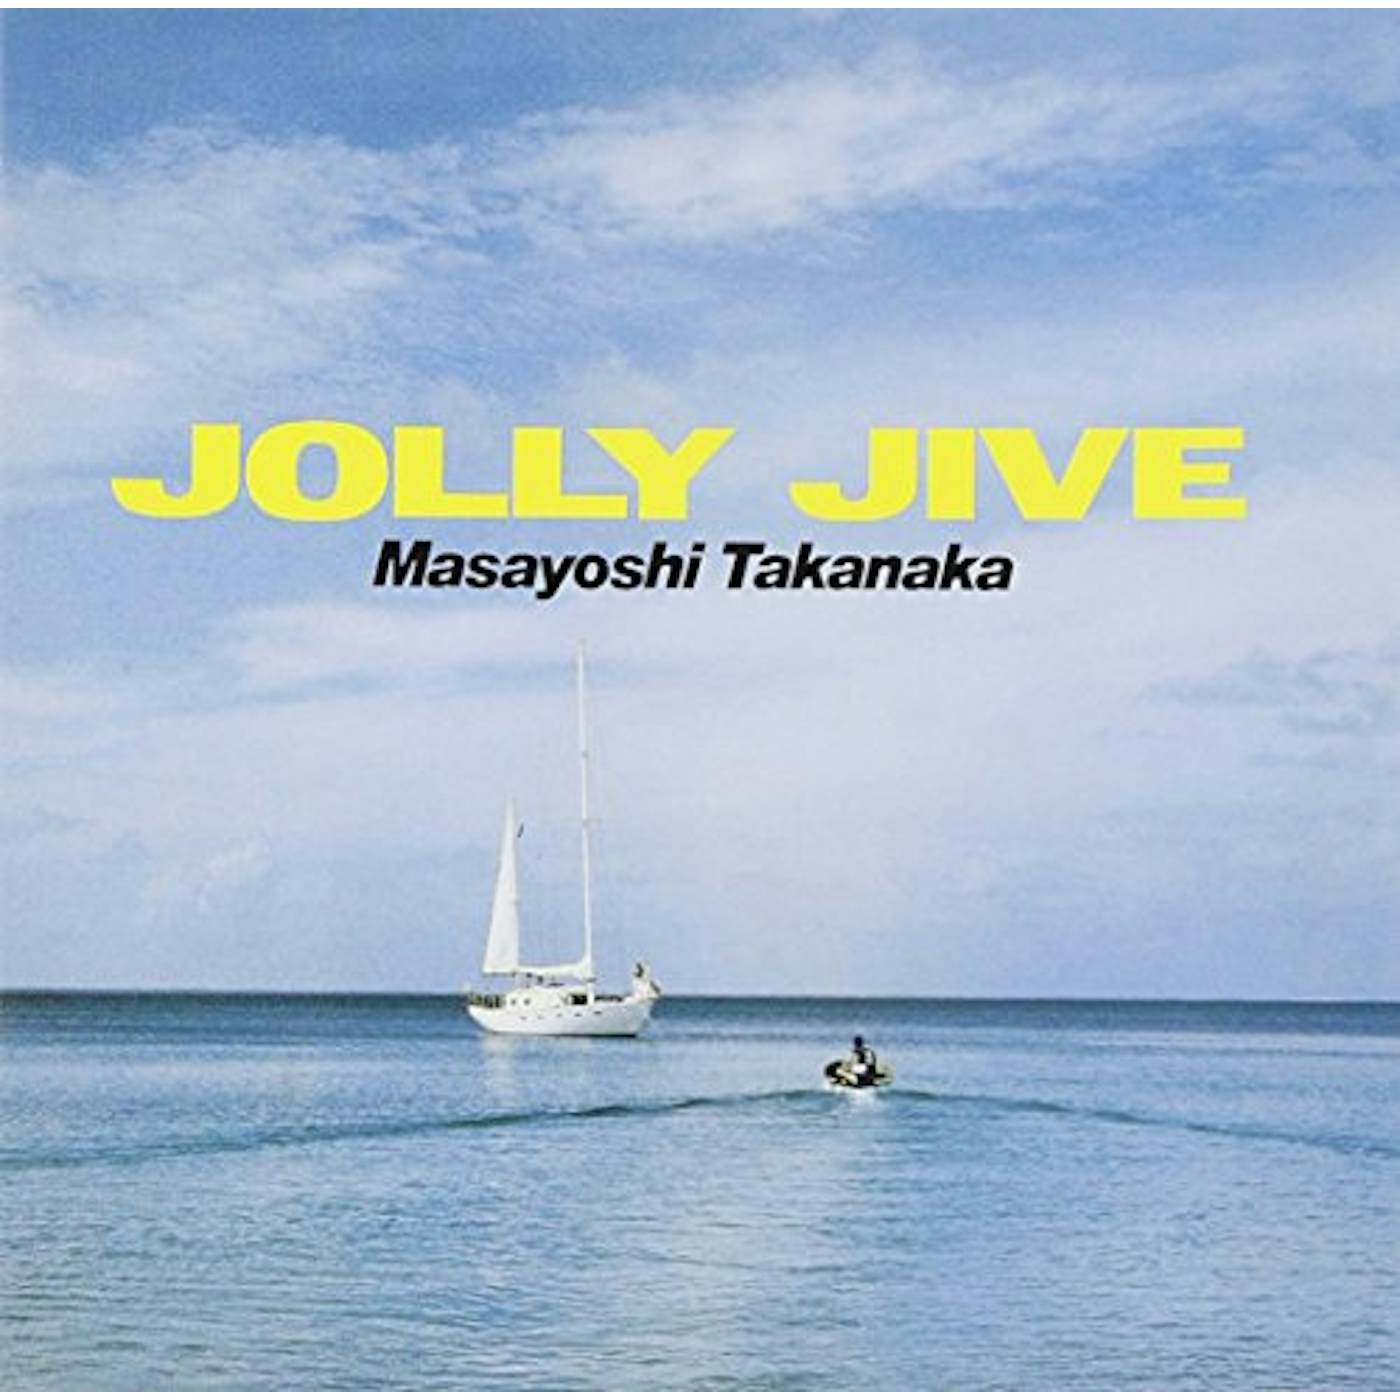 Masayoshi Takanaka JOLLY JIVE CD